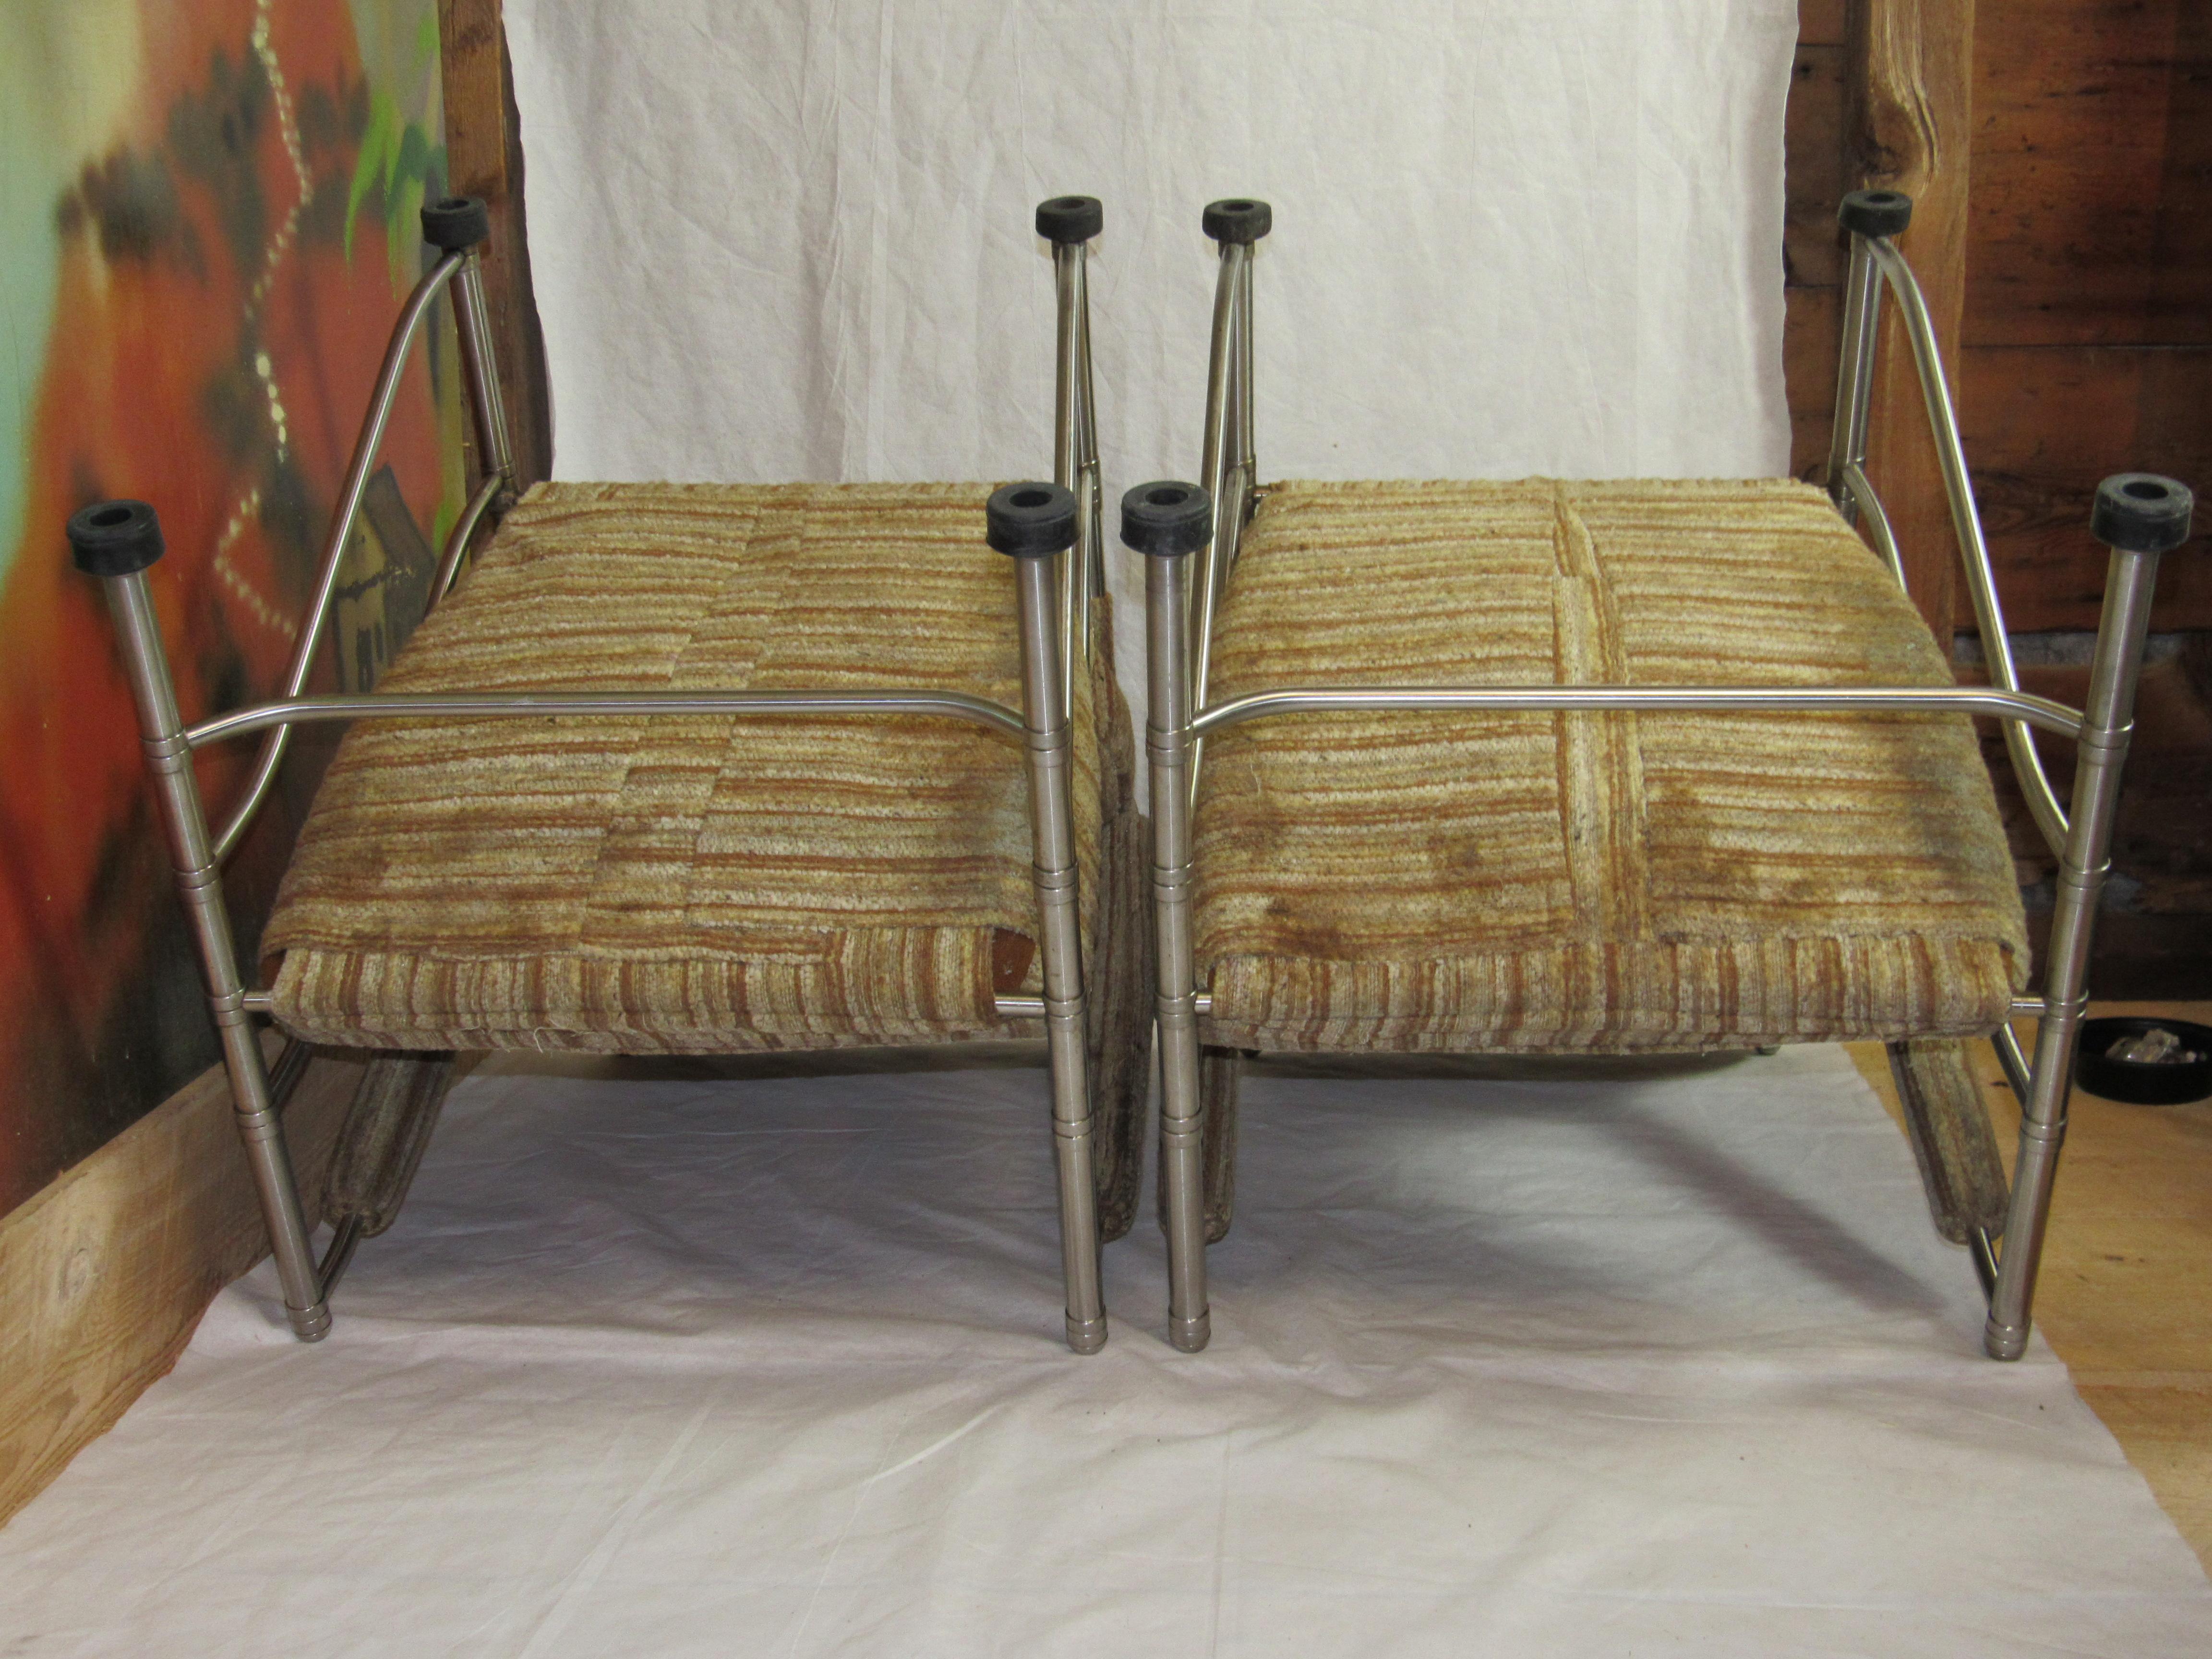 Stainless Steel Pair of Lounge Chairs Warren McArthur Style No. 1014 AUR, circa 1935